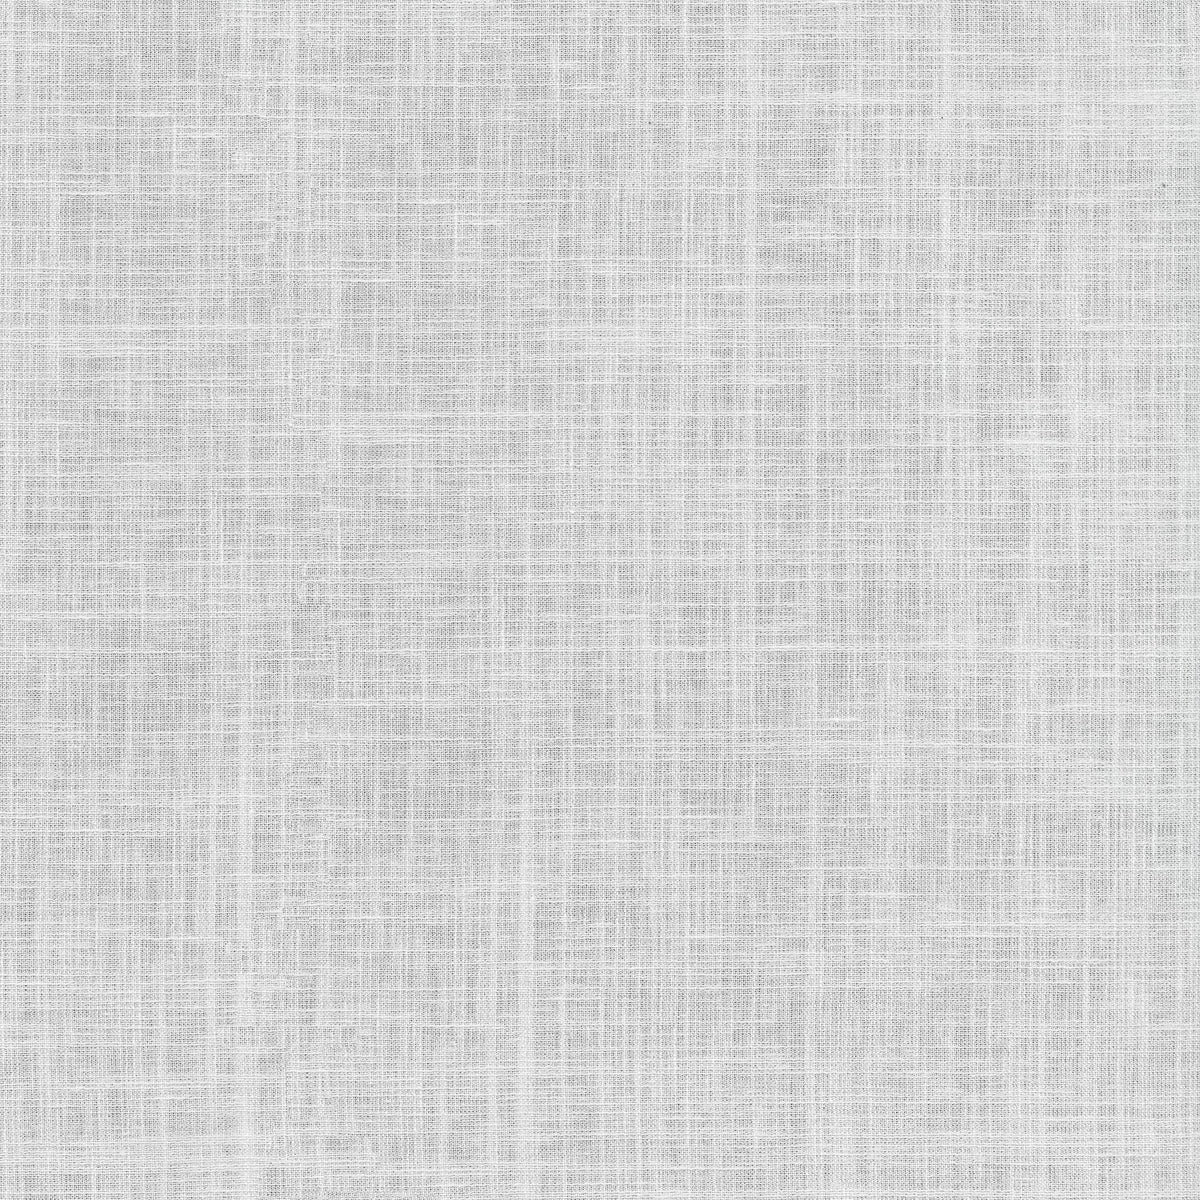 P/K Lifestyles Isabella - White 411110 Fabric Swatch